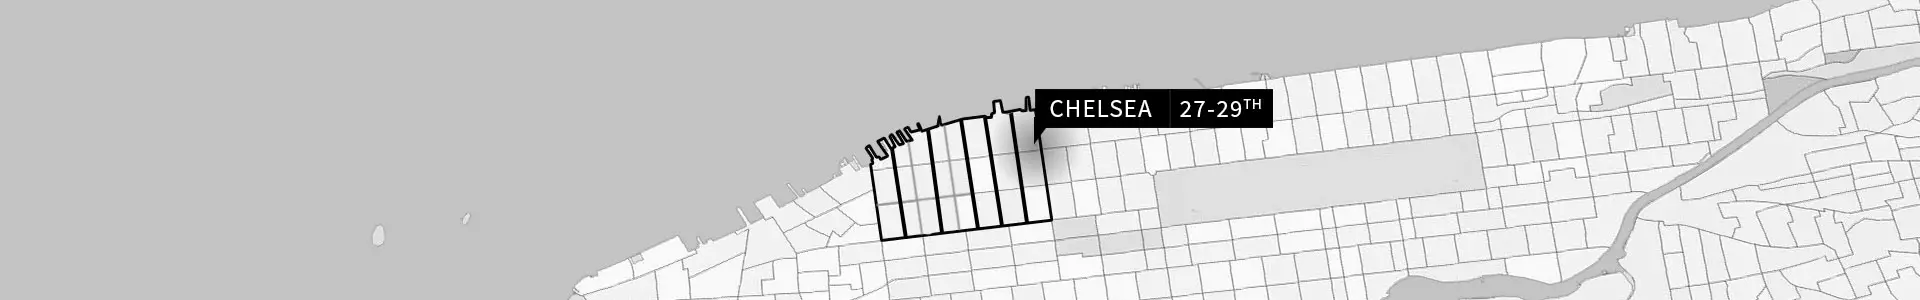 Chelsea, 27-29th Street map